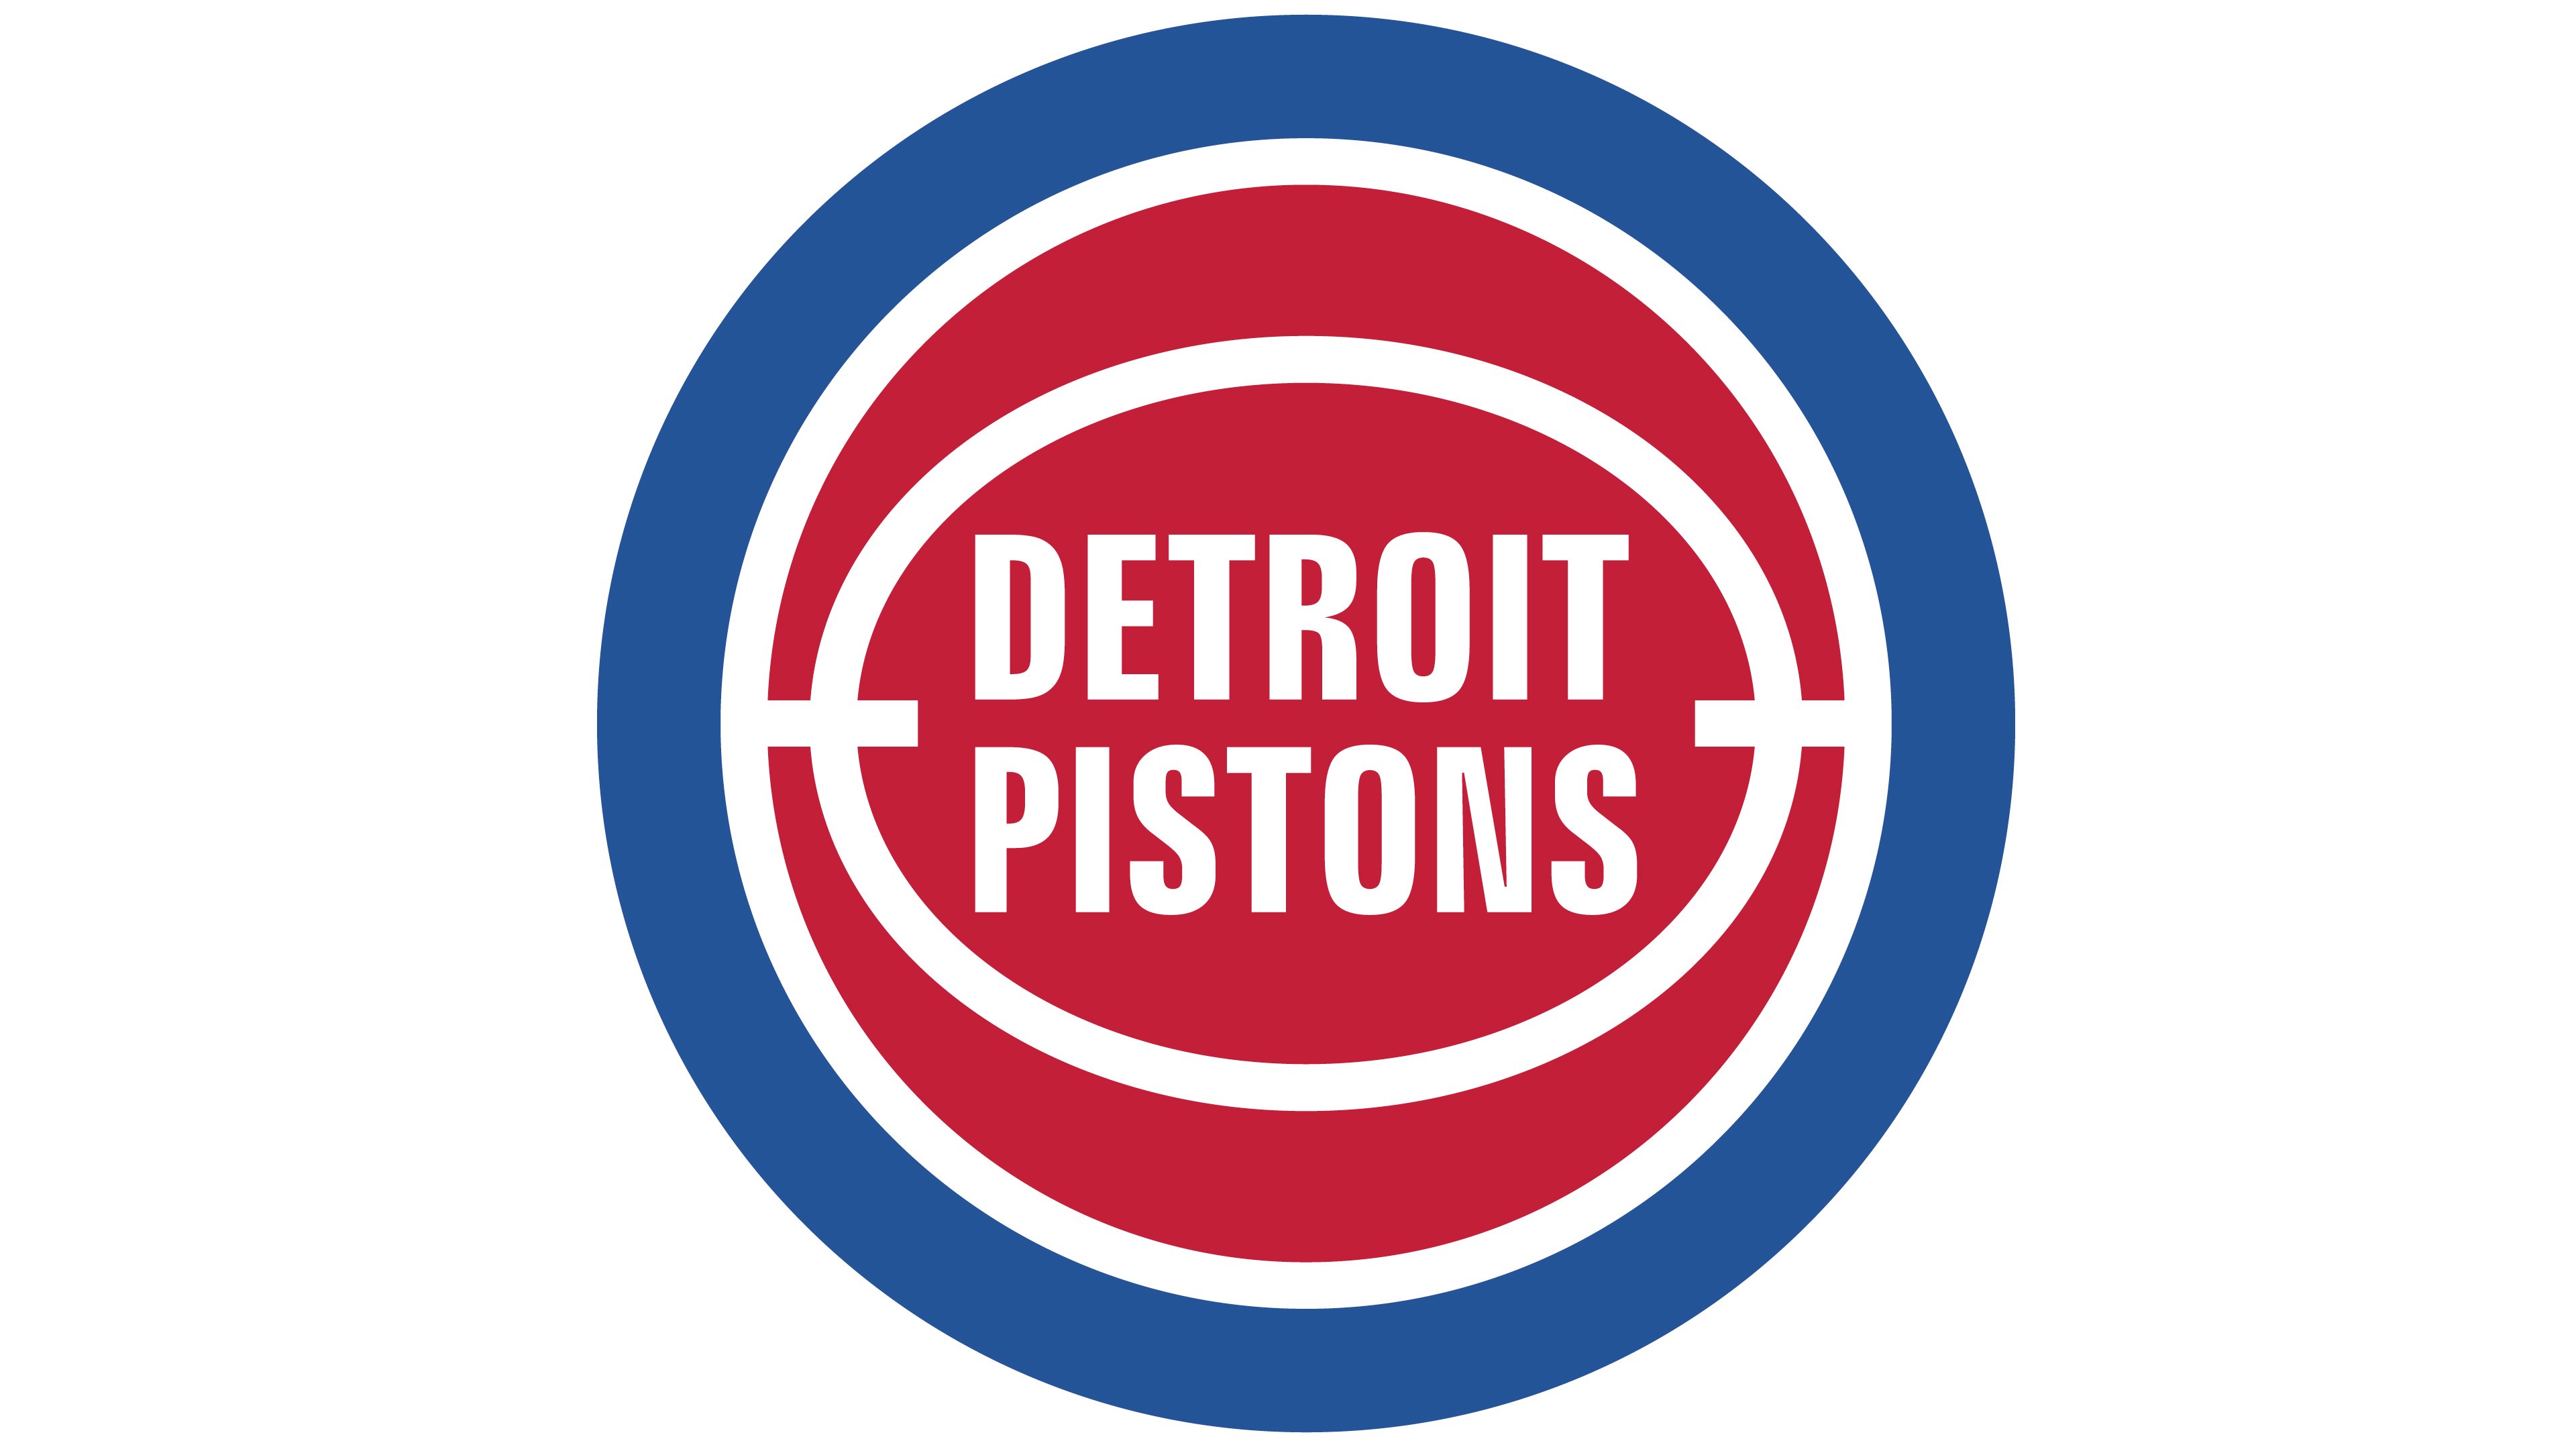 News and updates on Detroit's basketball team #BadBoys